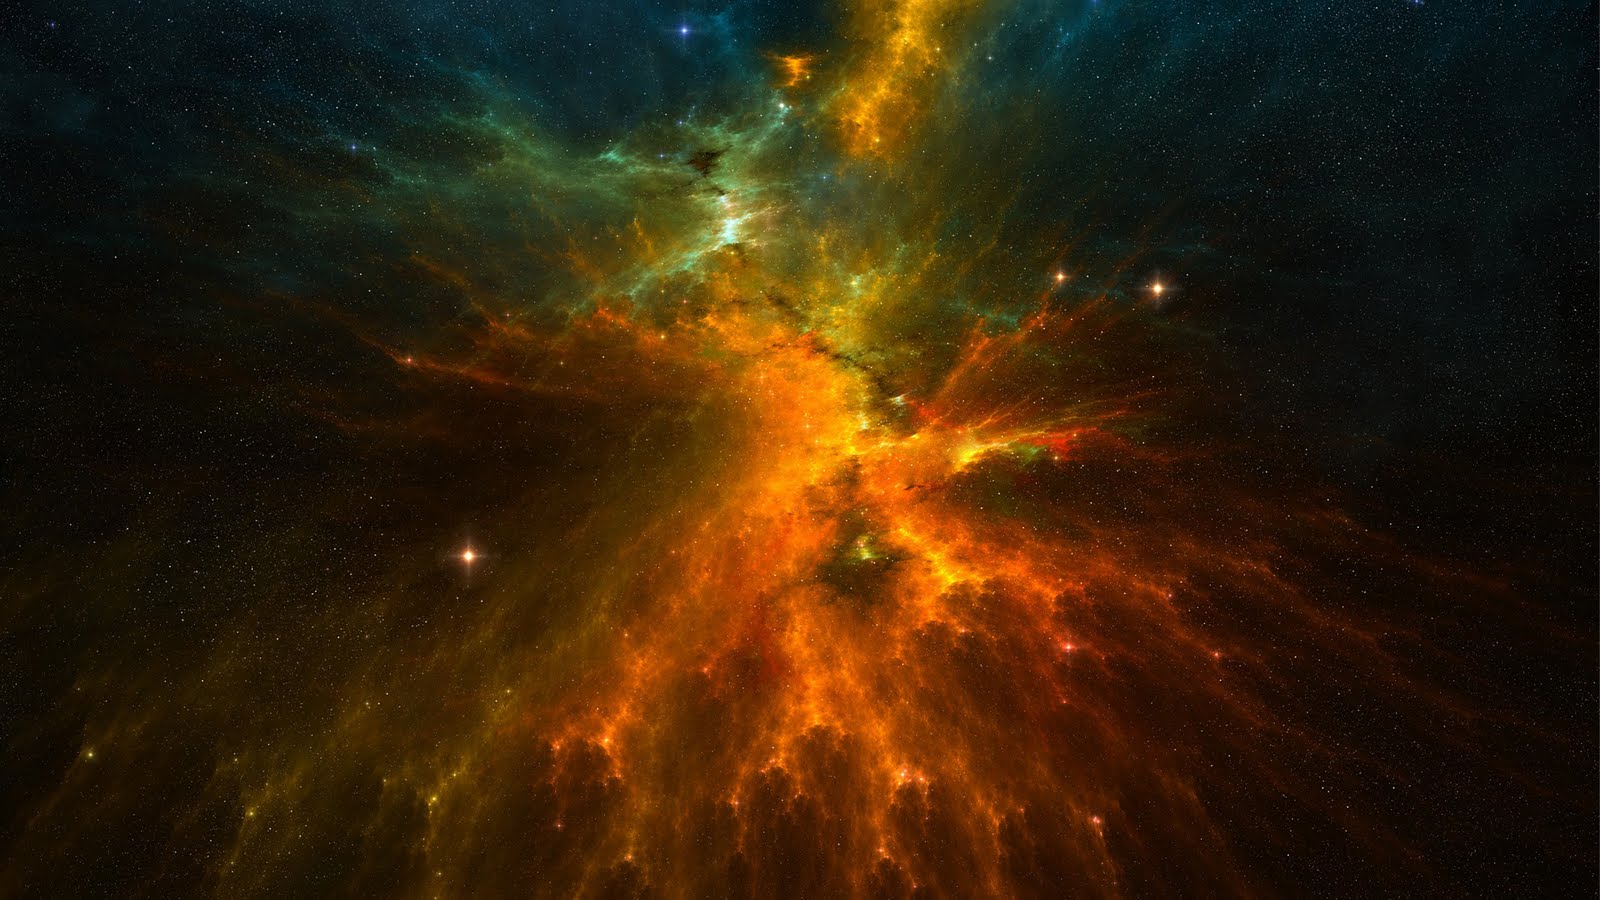 https://blogger.googleusercontent.com/img/b/R29vZ2xl/AVvXsEhJRX-FwWNzmJ-WAItSqADVSEeYirWY6UH0Hnl3FJc9rsfbvJfTsbwmiaooTD071QgS77noElbxN3pRhXuXsCvPdS0s069JjwcECRQ5IyQvkFbKaMR6iE7CBNh87xOTfTGKH_btAnDmw2Q/s1600/Stellar_Cascade_Nebula_1920x1080+HDTV+1080p.jpg